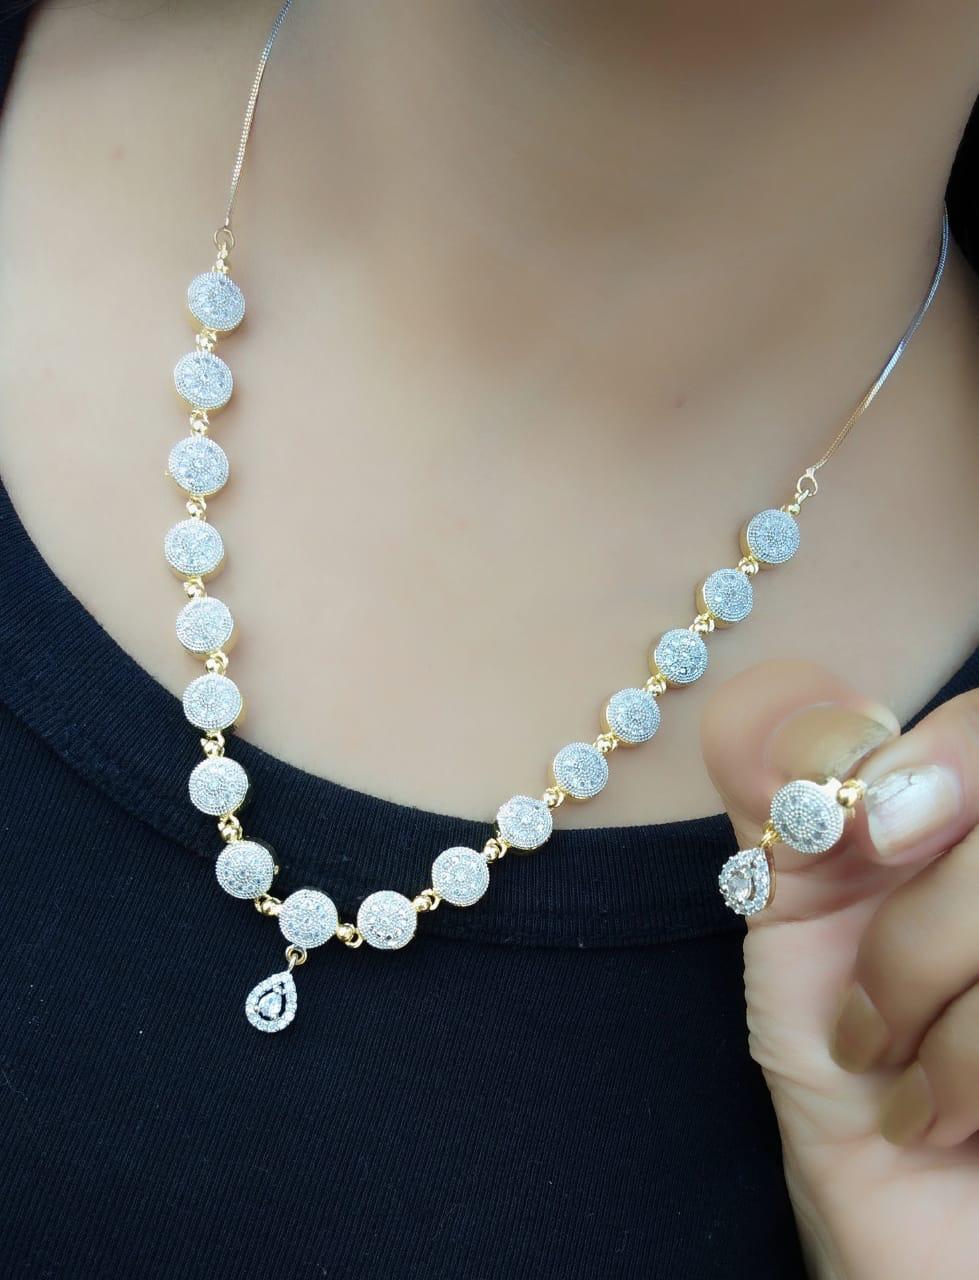 Exquisite White American Diamond Imitation Necklace Design Set